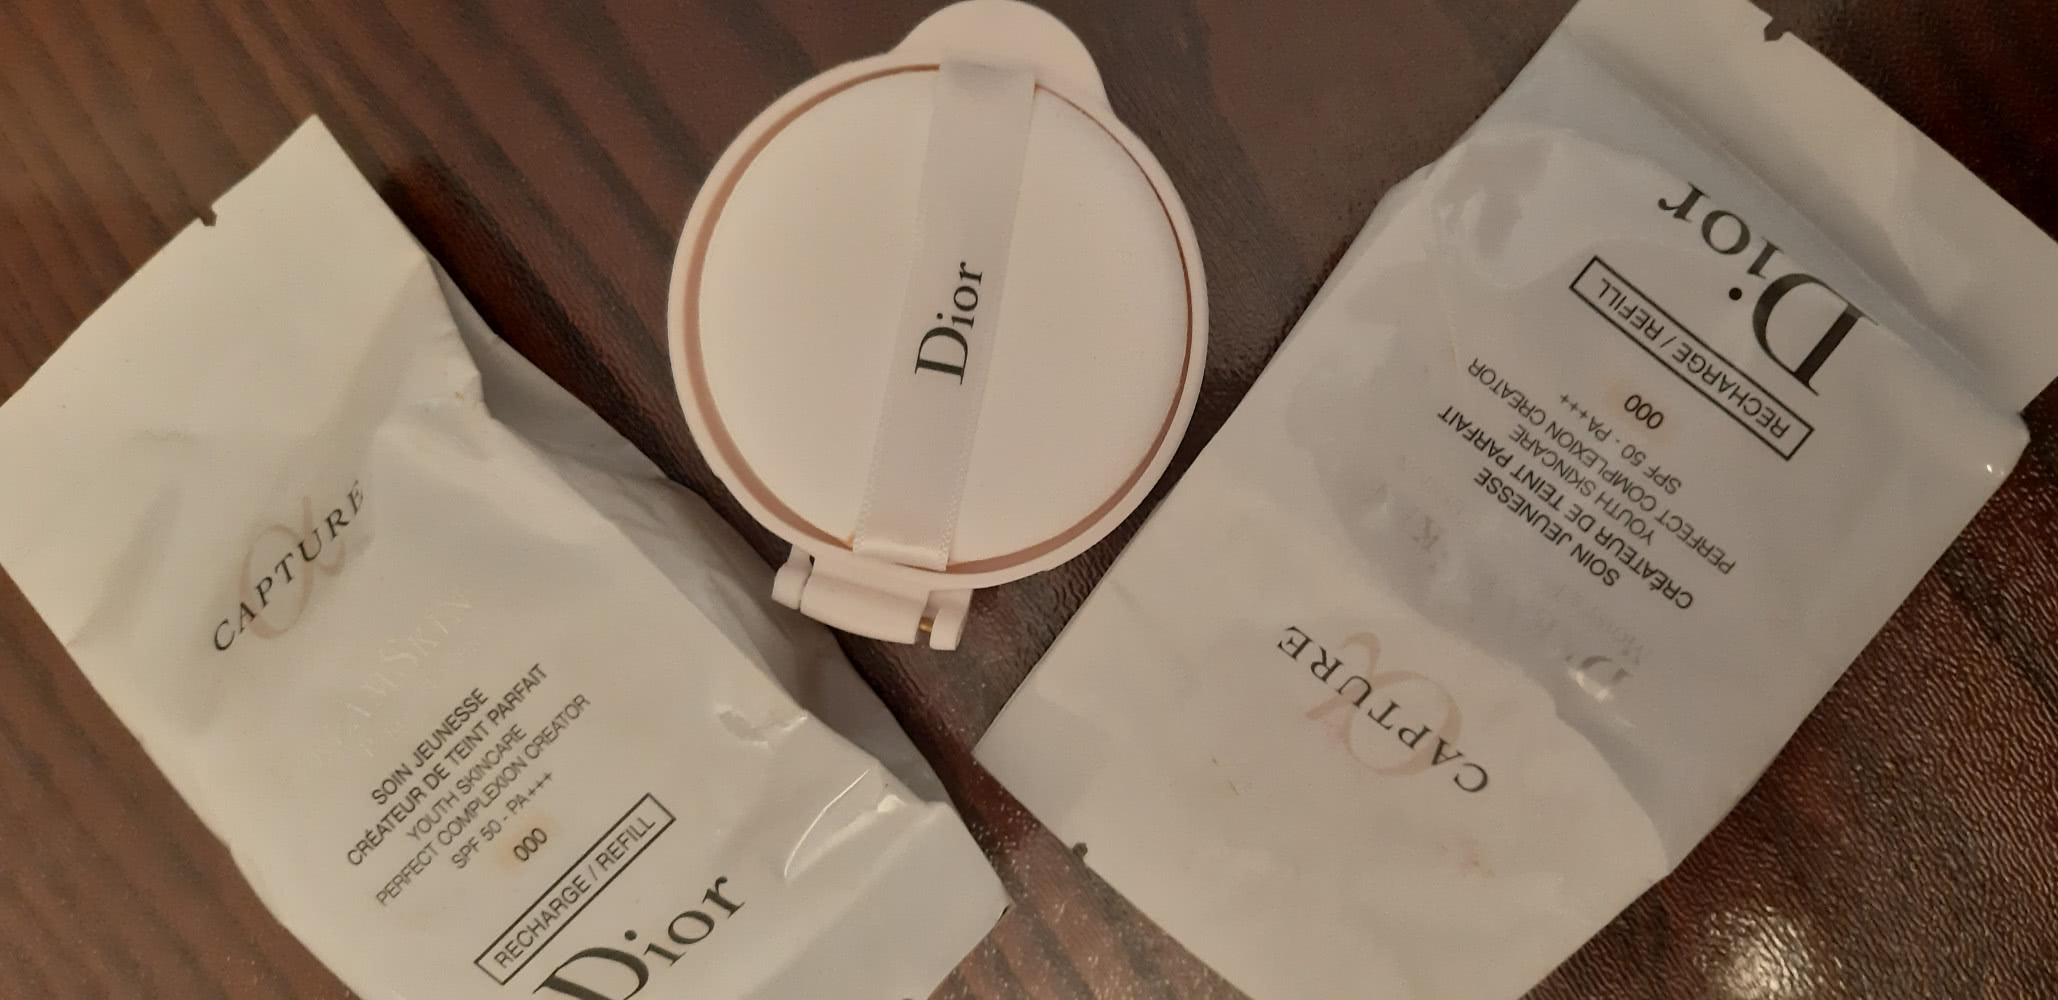 Dior capture dream skin тональный крем кушон 000